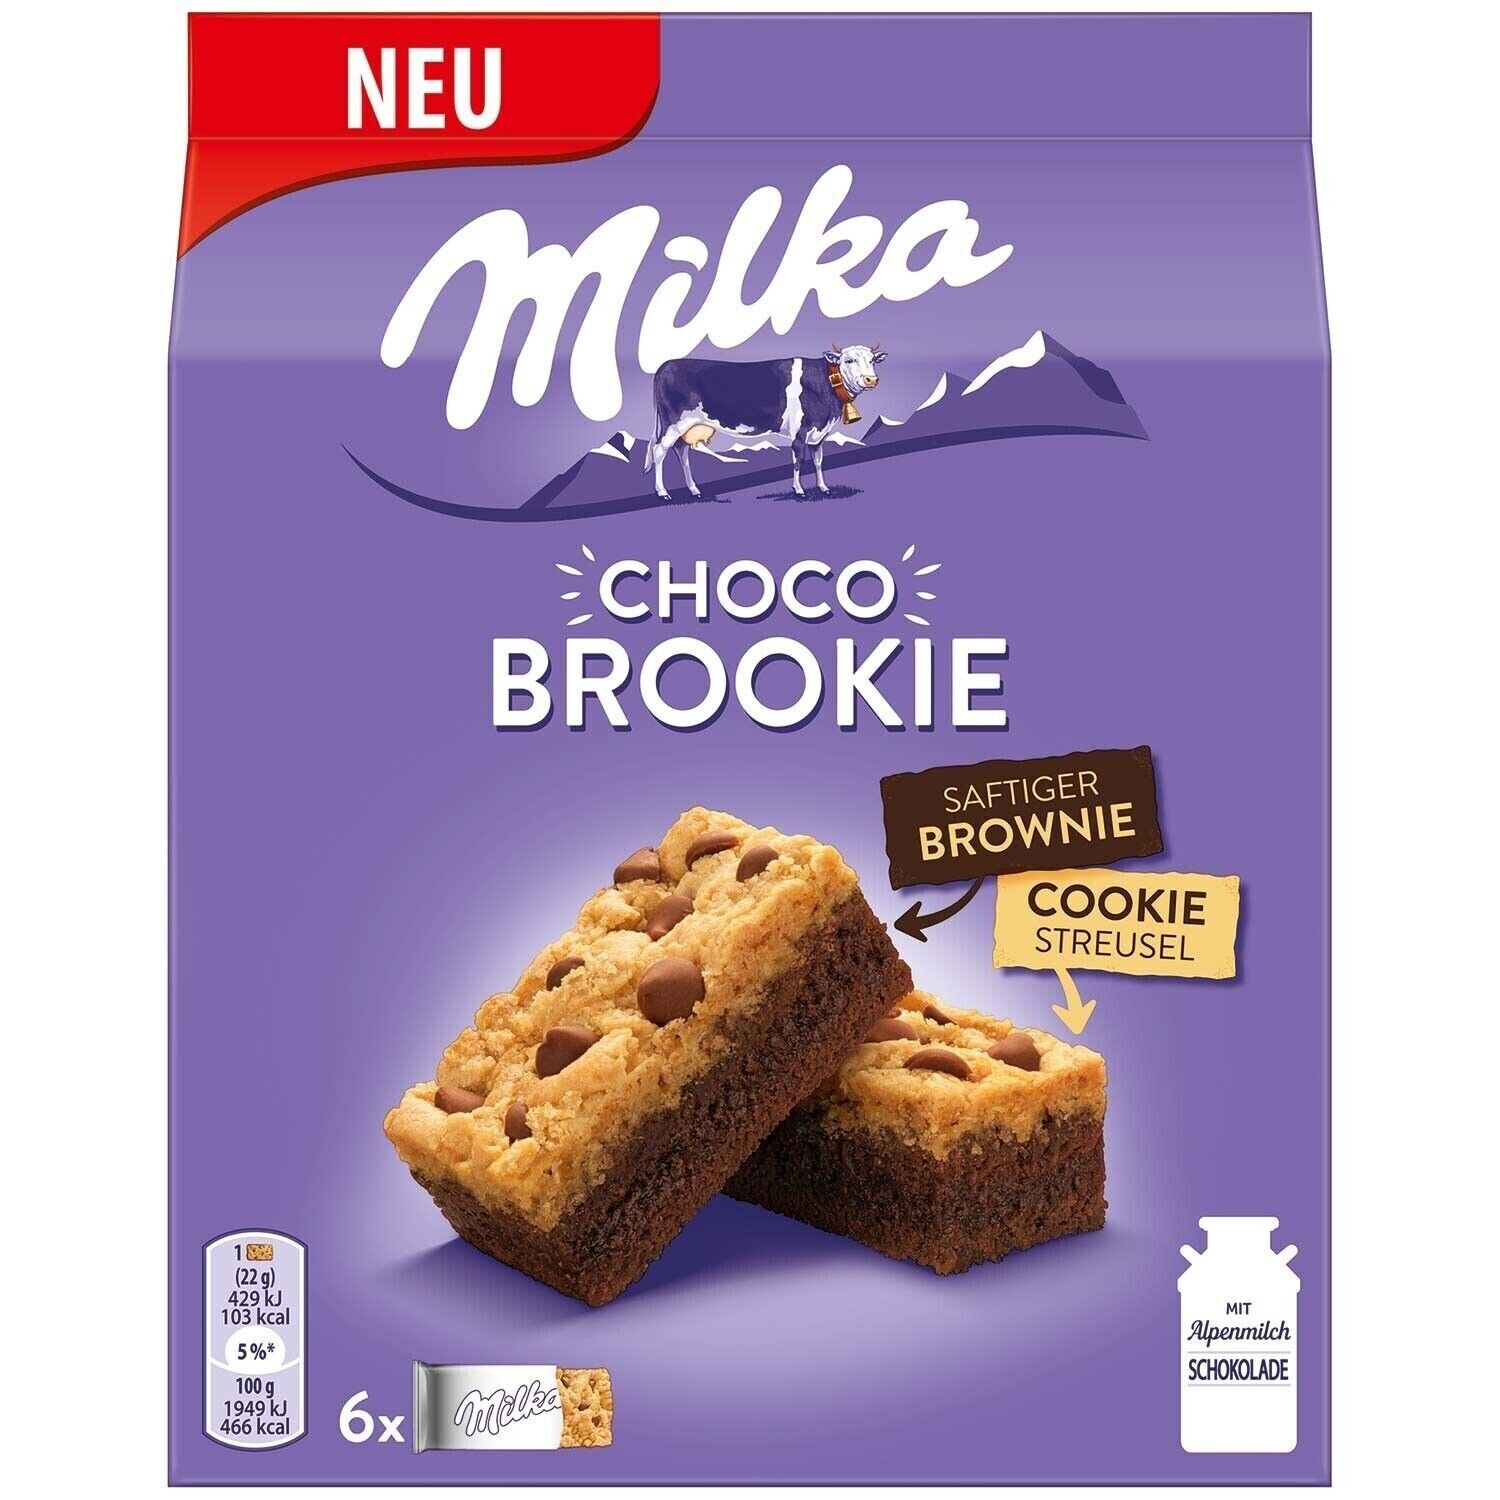 Milka CHOCO BROOKIE Brownie & Cookie fusion 1 box/6 pc. FREE SHIPPING - $11.87